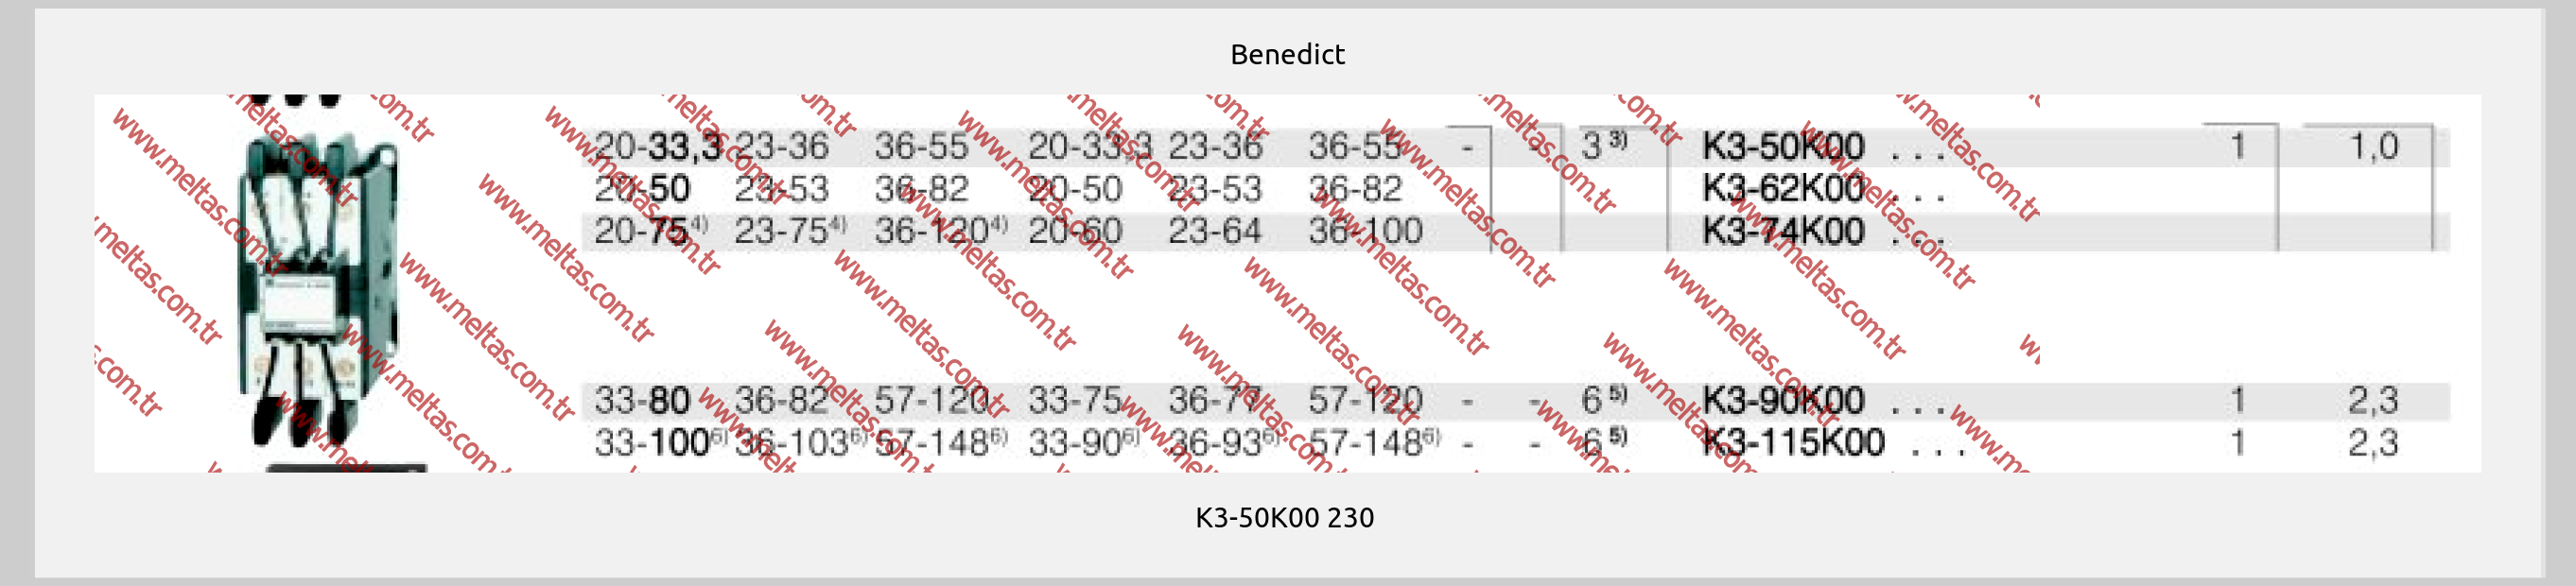 Benedict - K3-50K00 230 